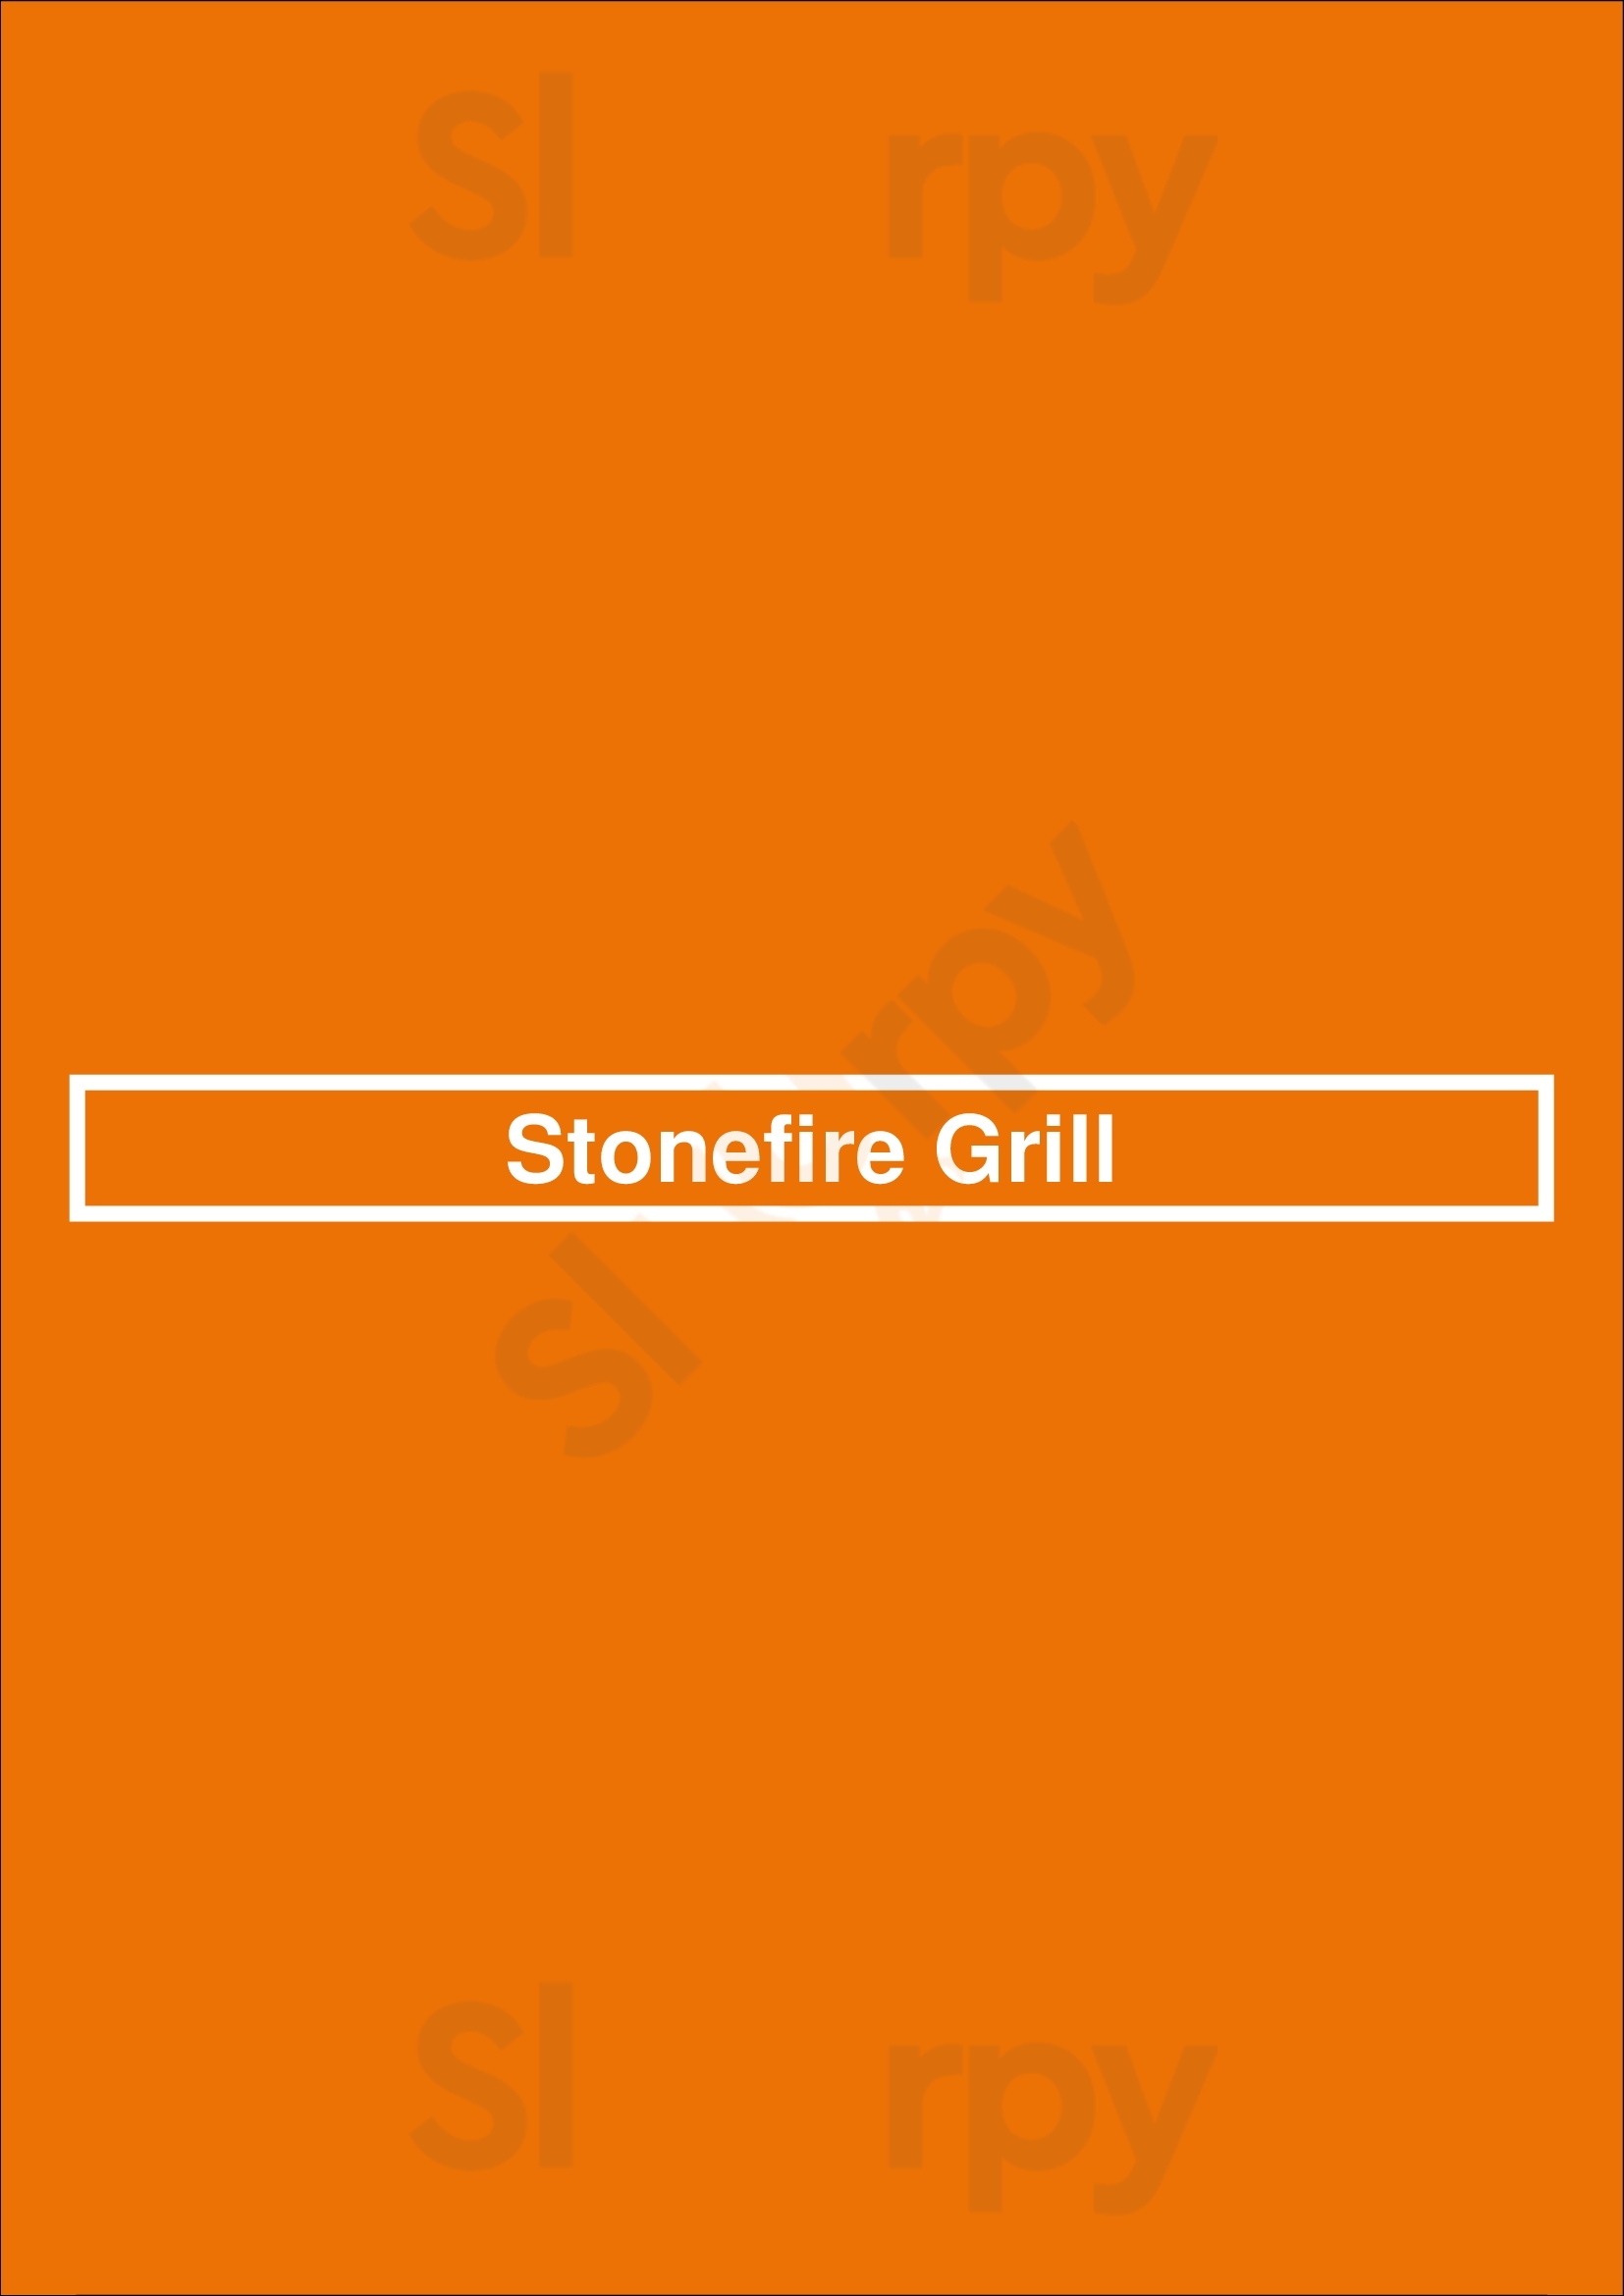 Stonefire Grill Los Angeles Menu - 1